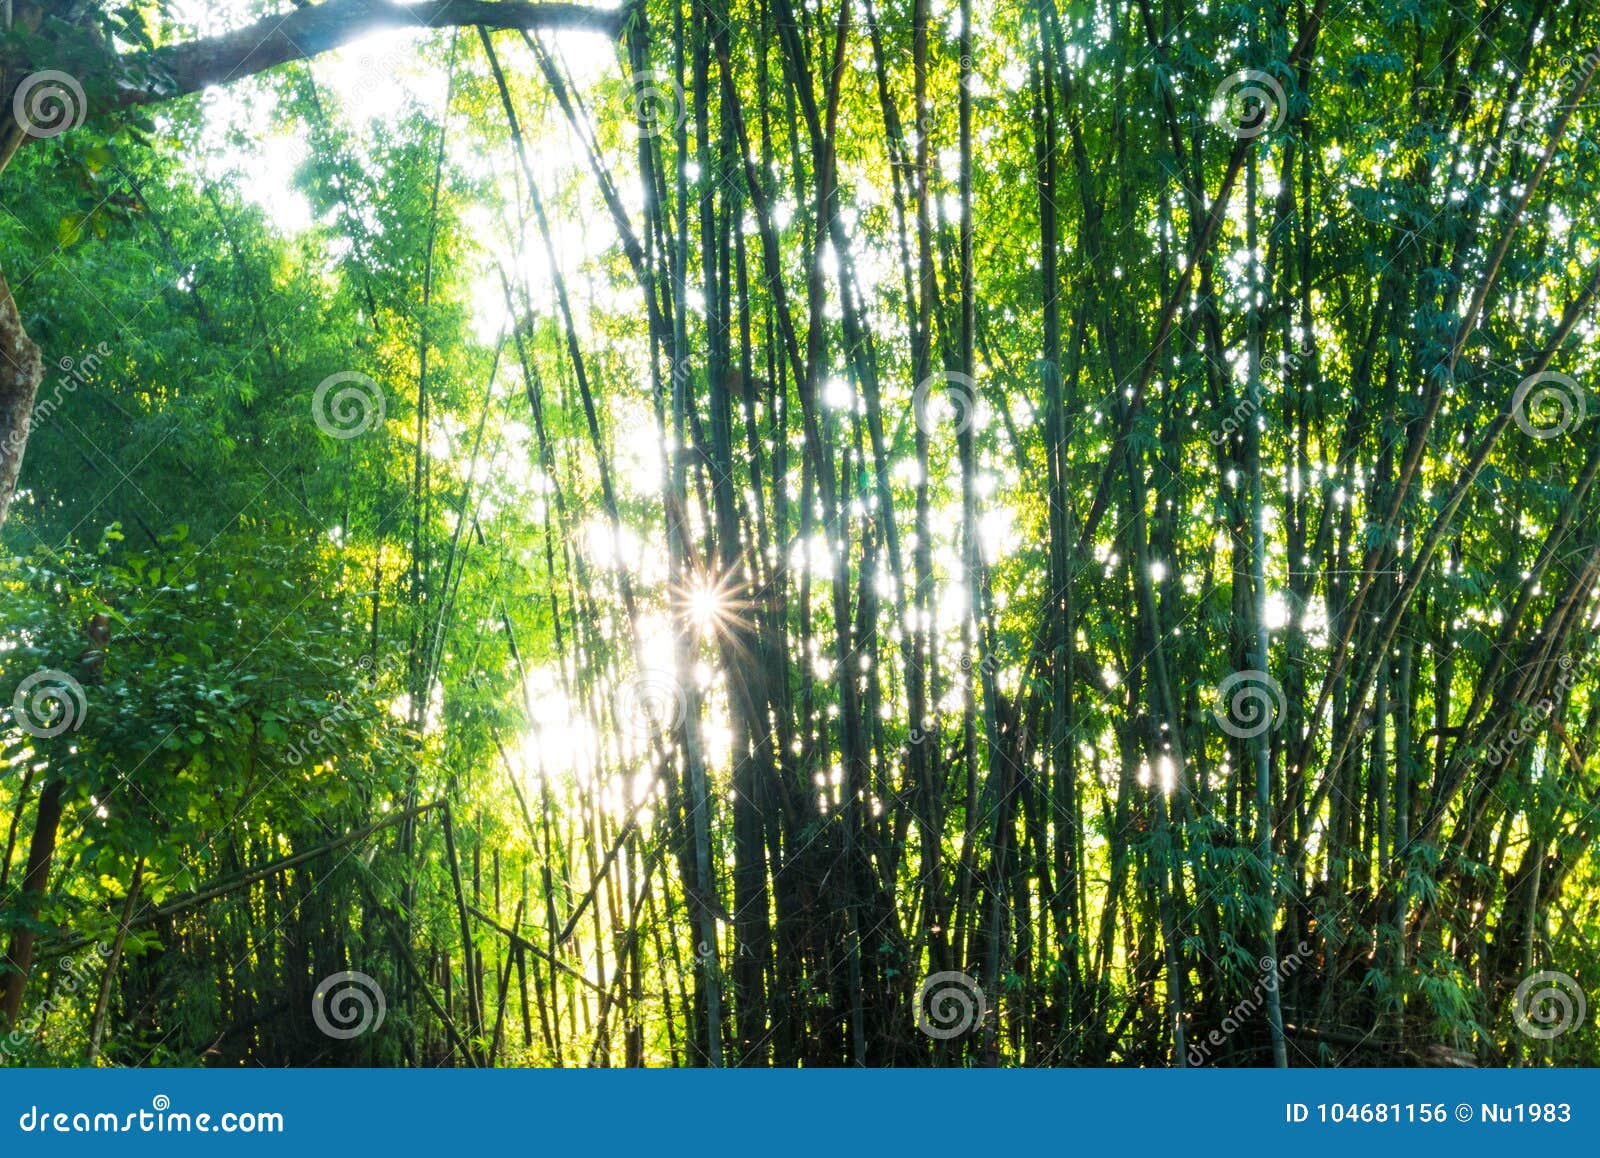 reforestation for sustainable development